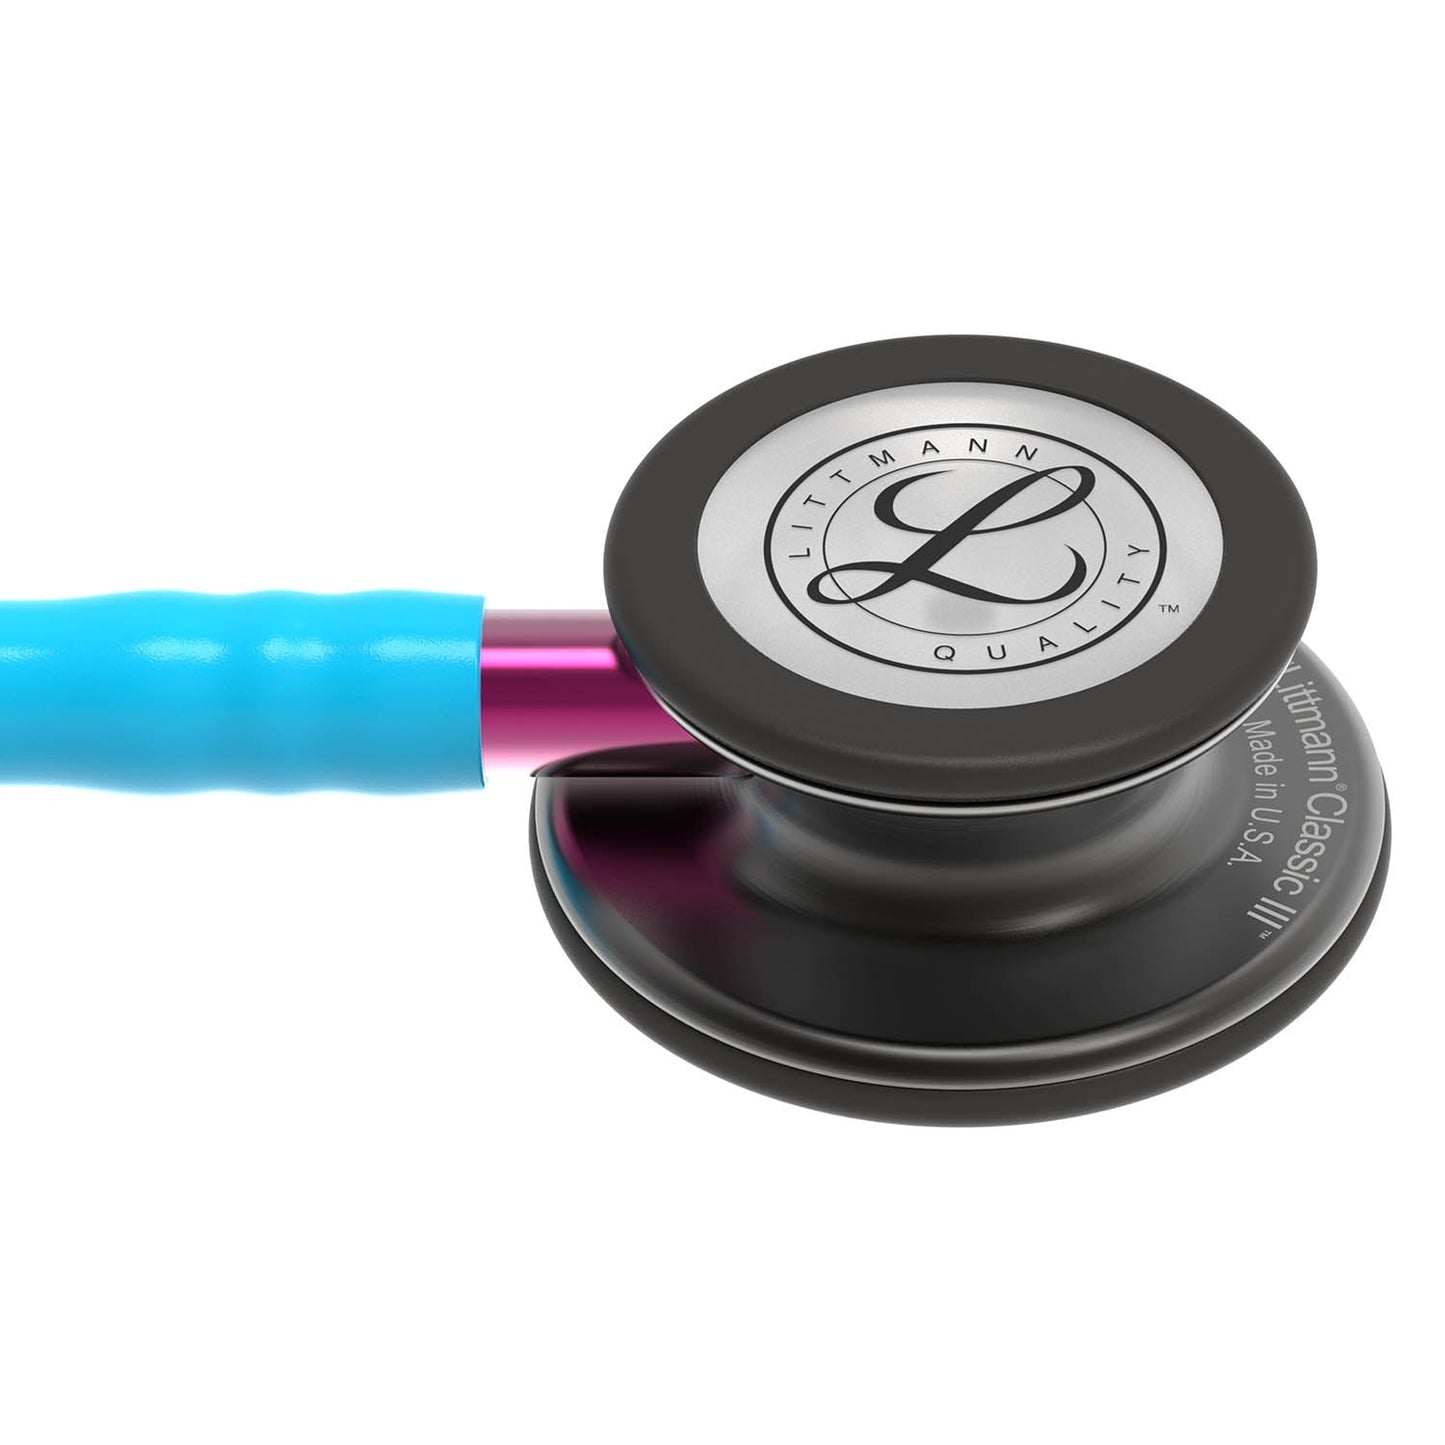 Littmann Classic III Monitoring Stethoscope: Smoke & Turquoise - Pink Stem 5872